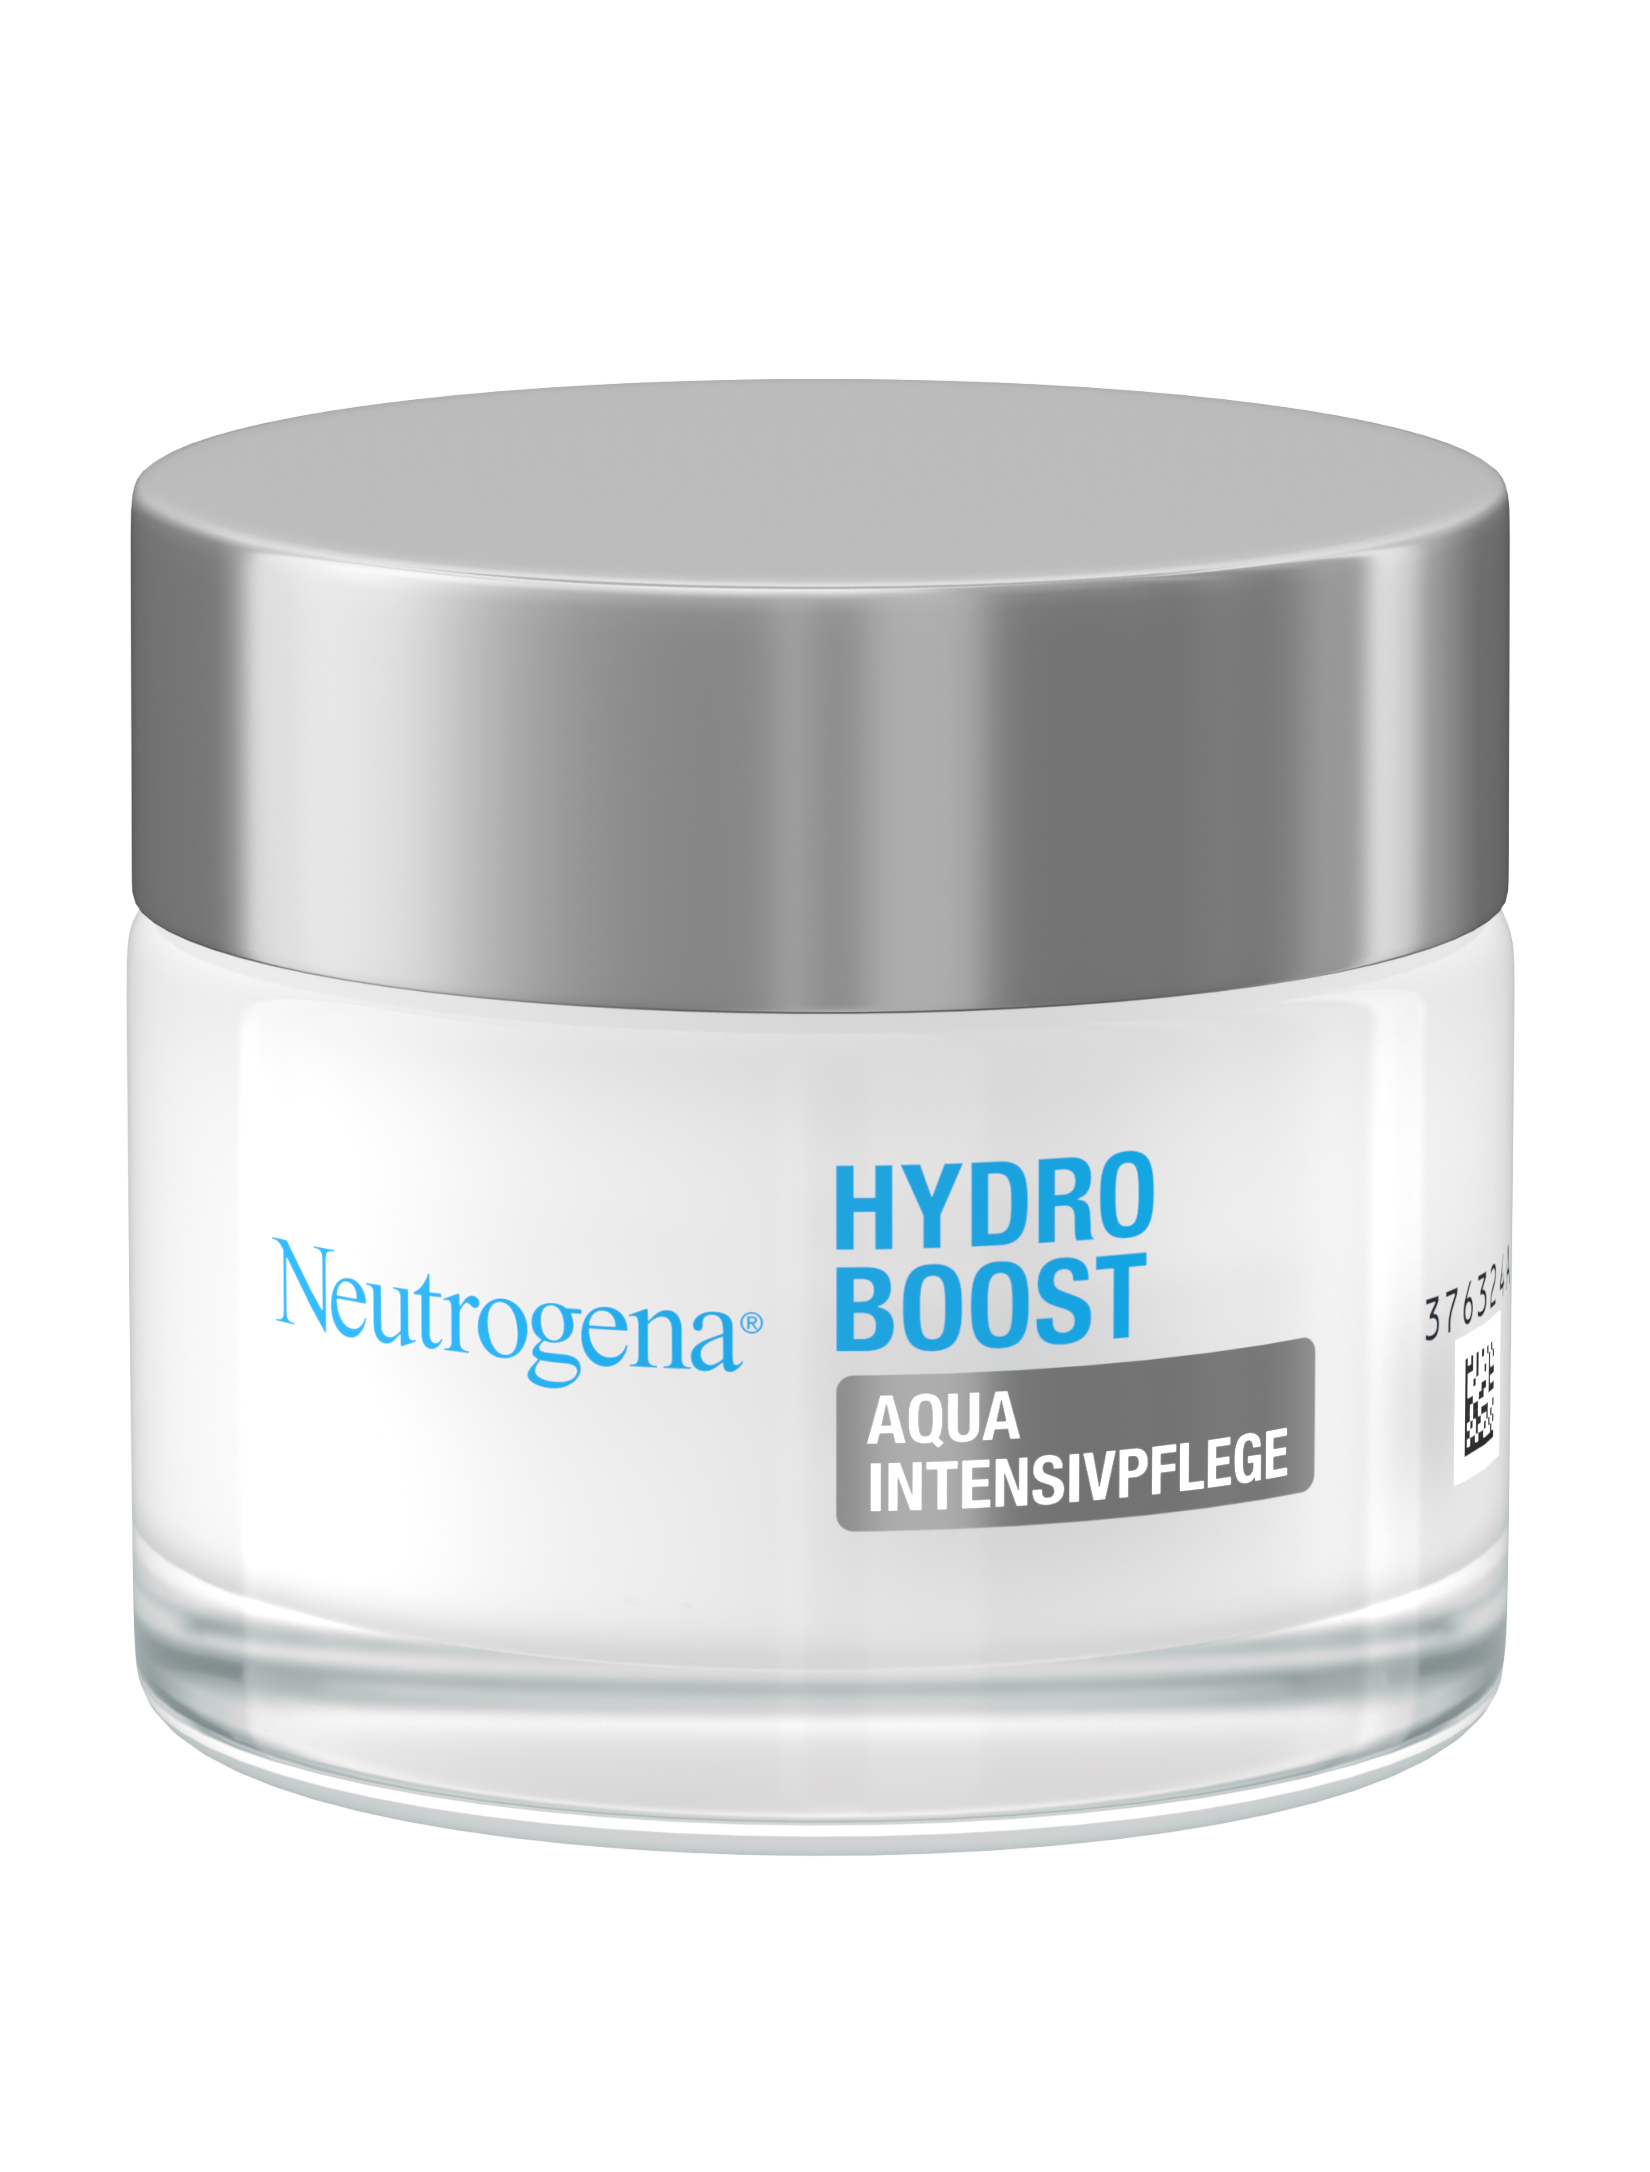 Neutrogena® Hydro Boost Aqua Intensivpflege